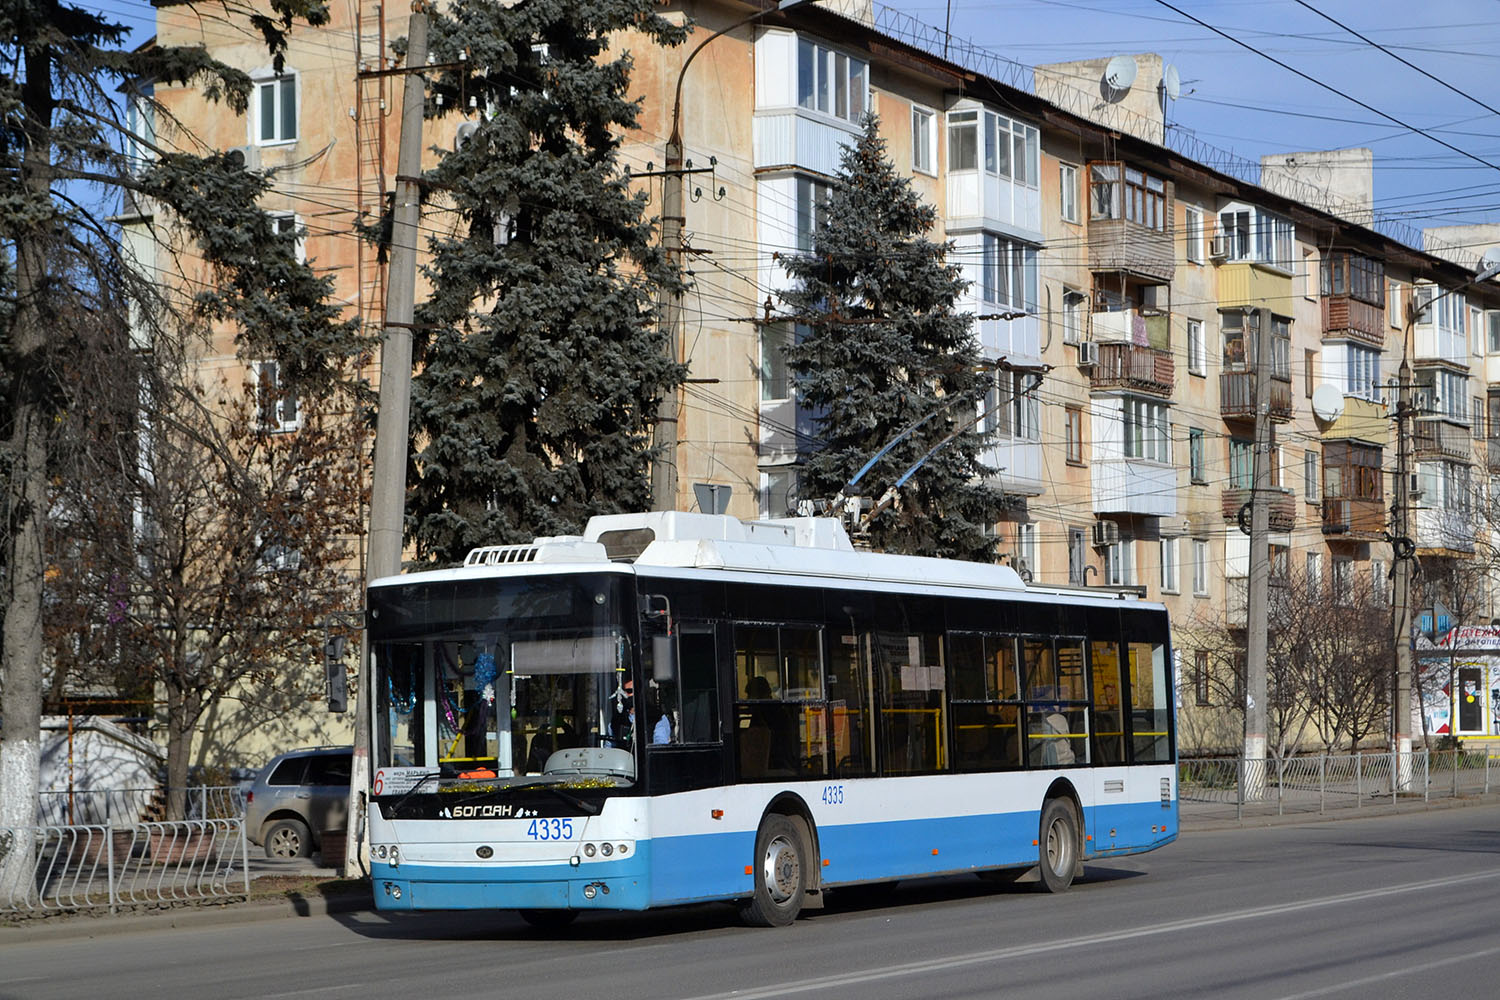 Крымский троллейбус, Богдан Т70110 № 4335